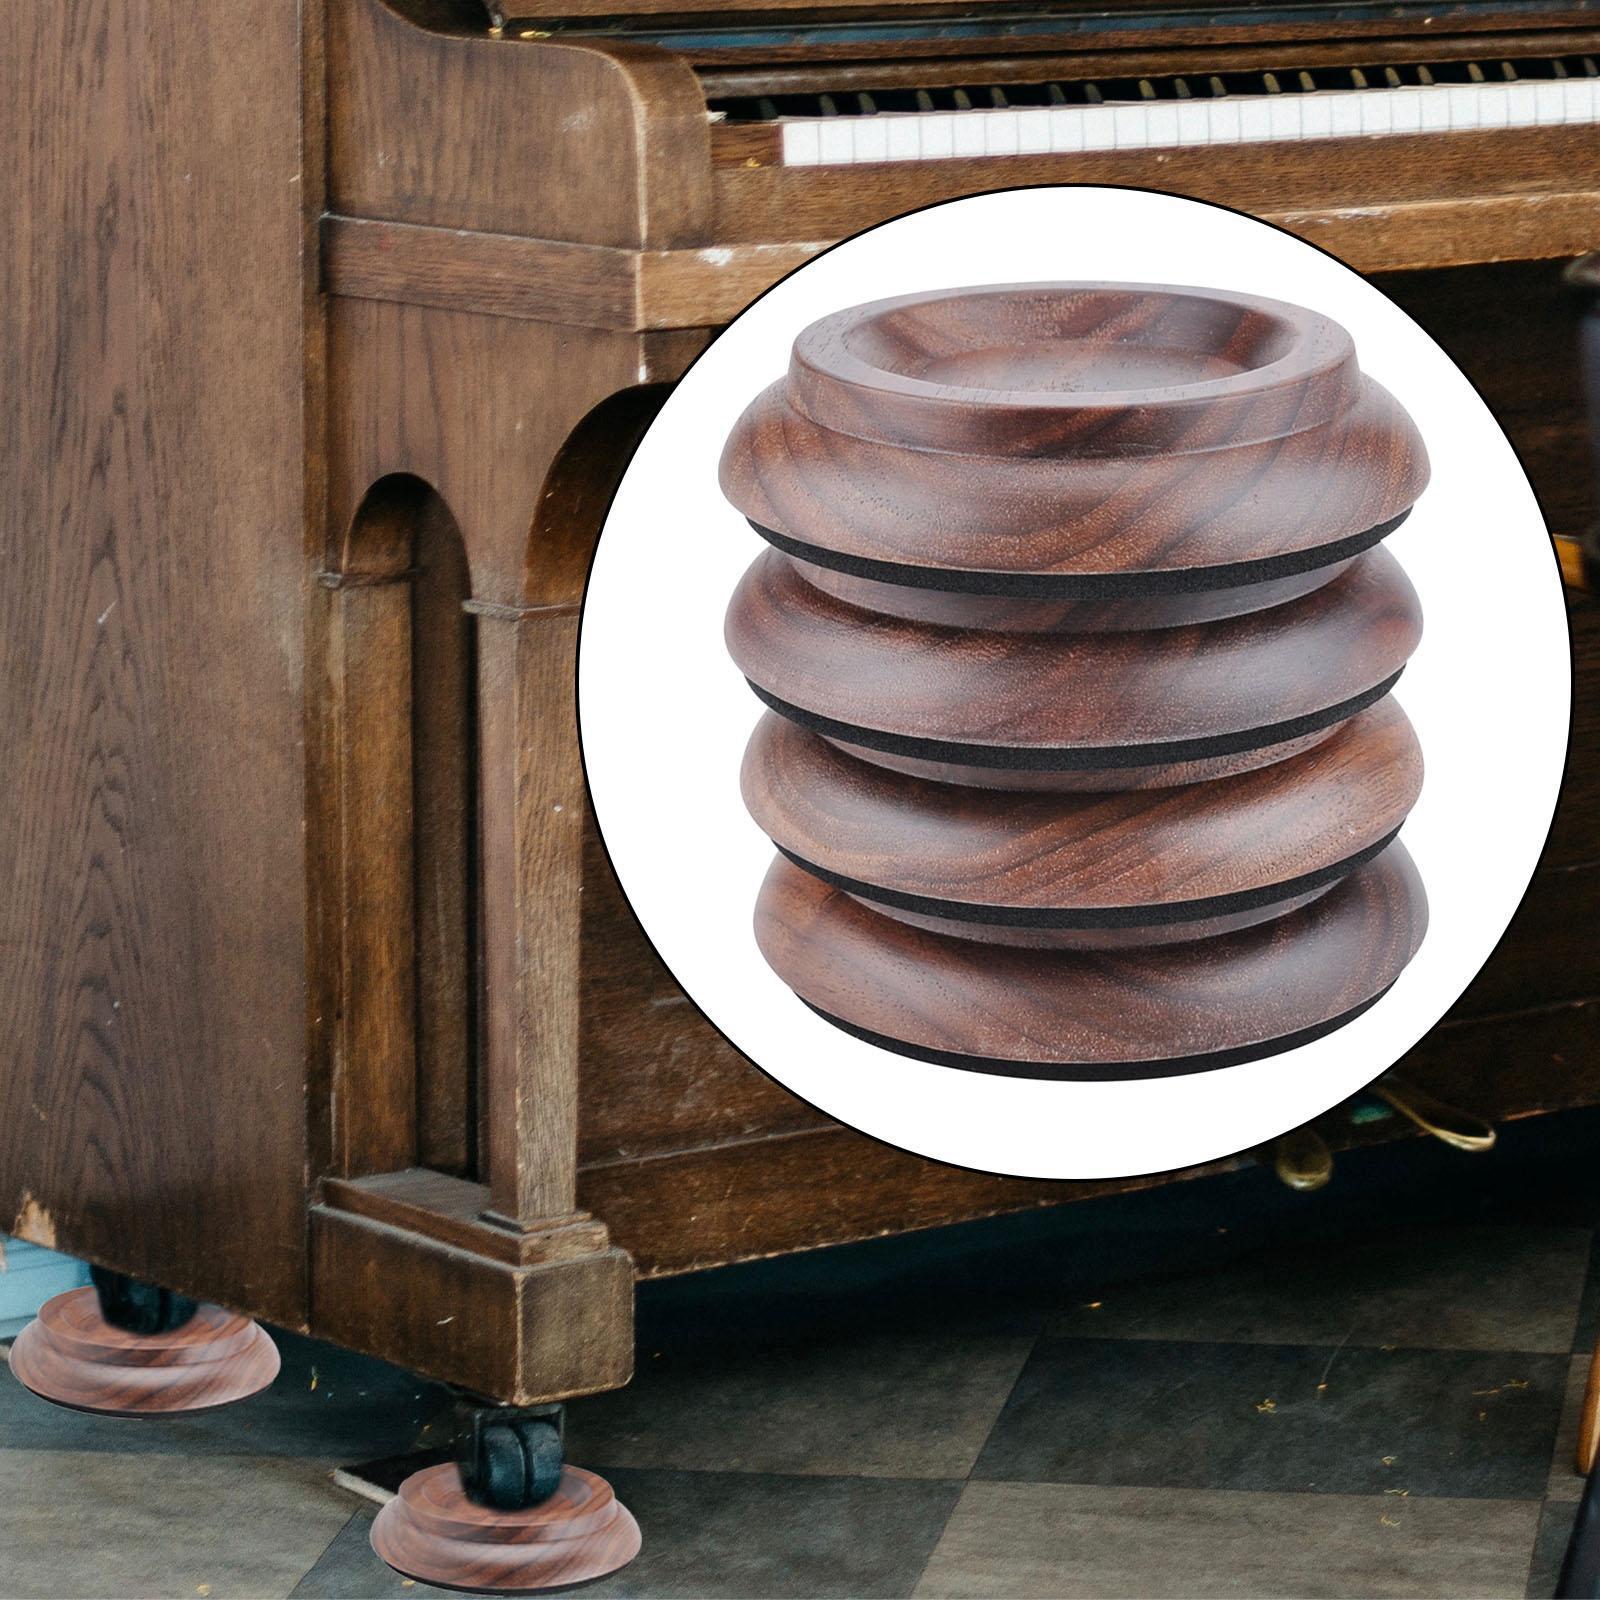 4Pcs Non Slip Piano Caster Cups Piano Foot Pads Piano Legs Foot Pad Piano Accessories